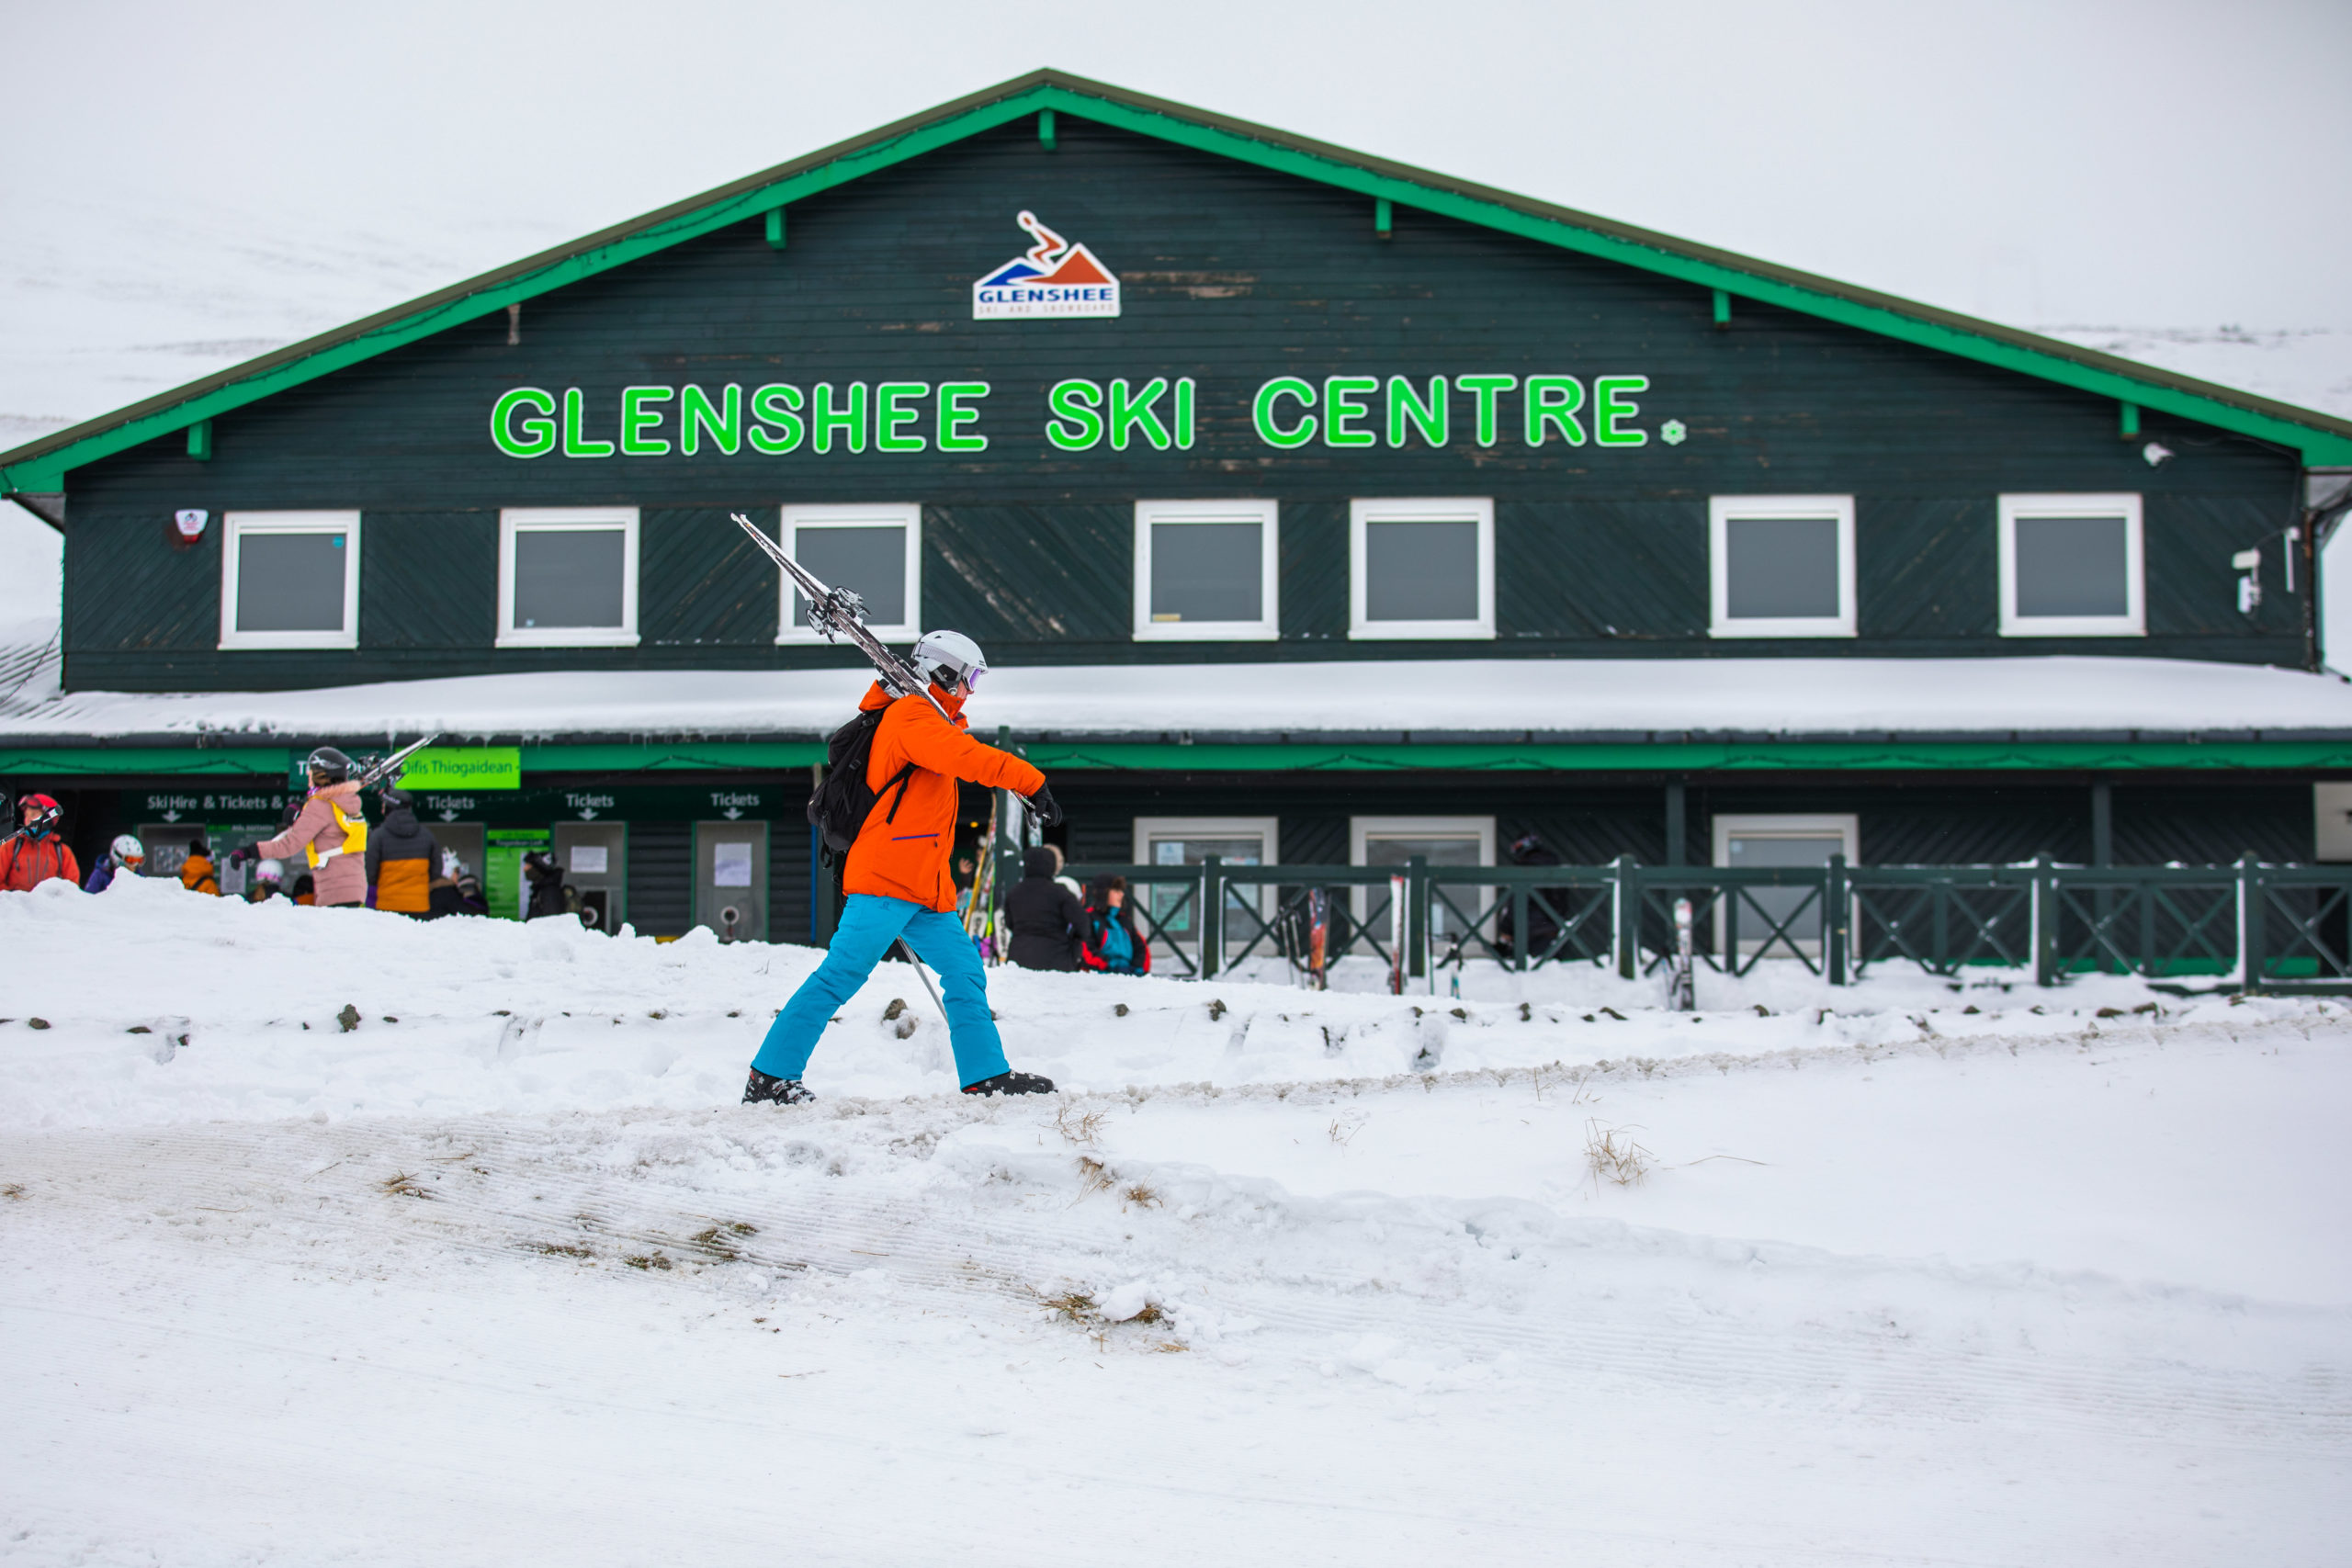 Glenshee Ski Centre on Wednesday.